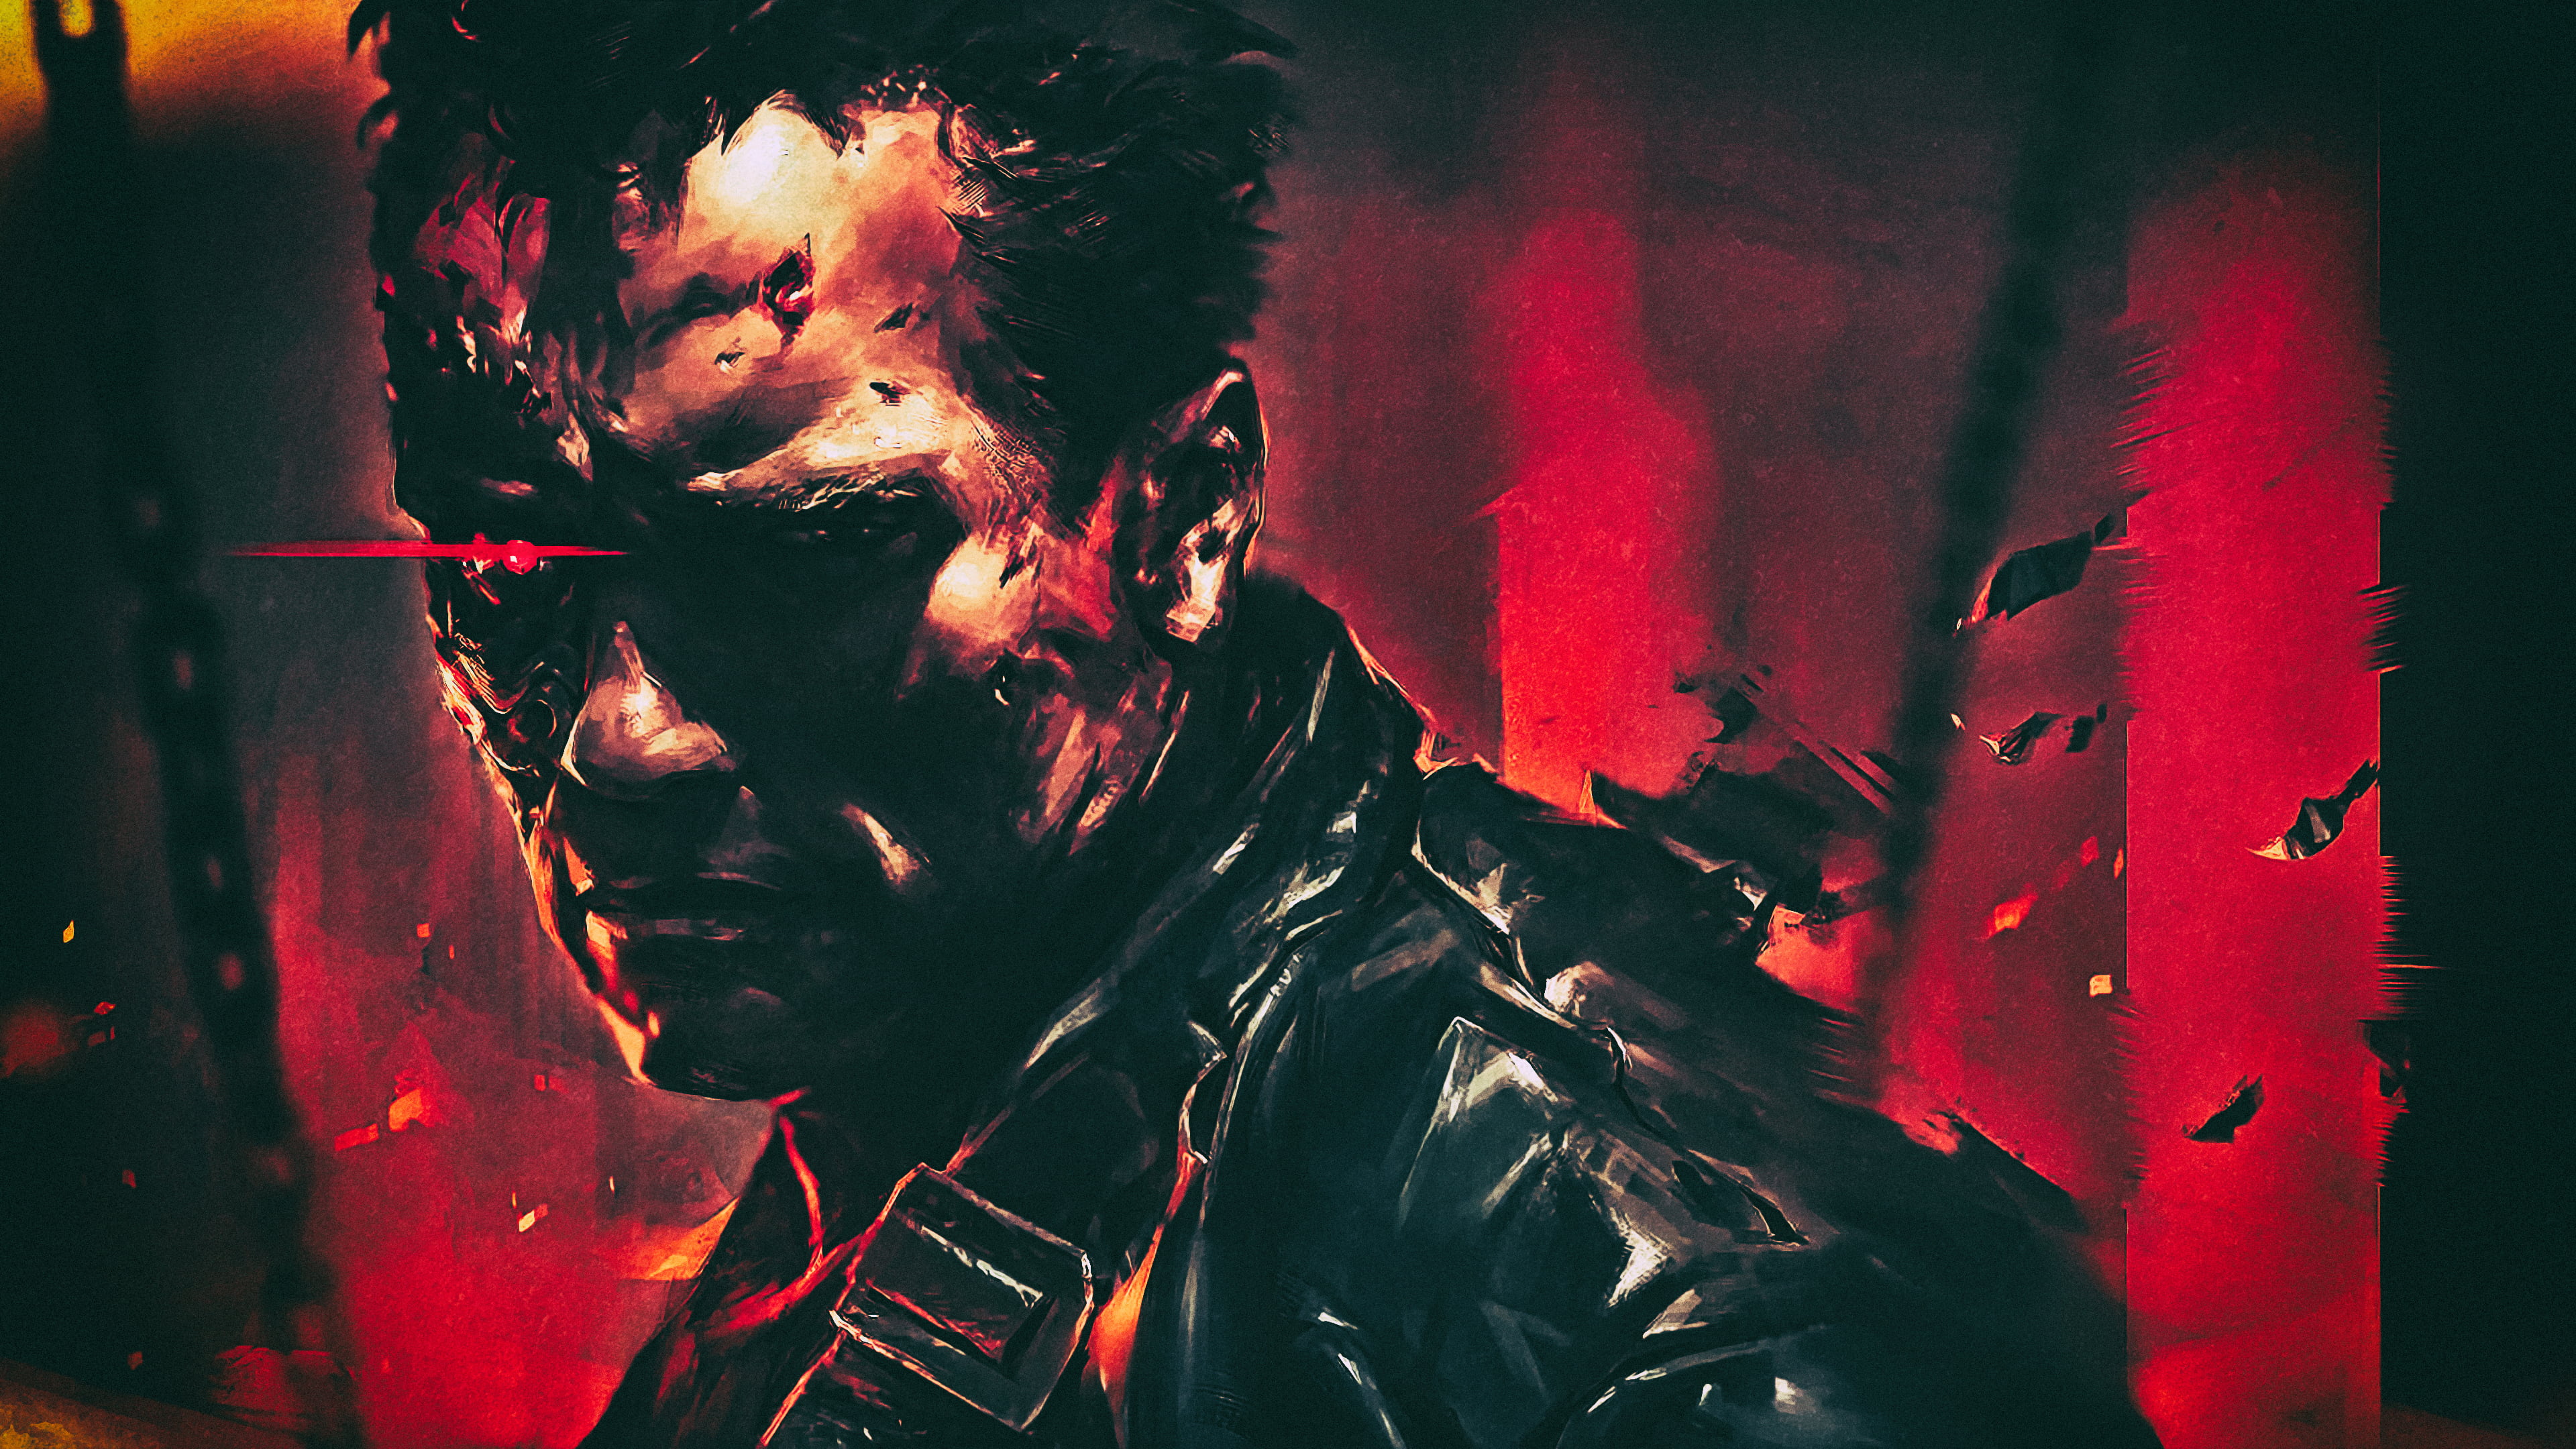 man in black leather jacket painting, Terminator 2, T-800, cyborg, Arnold Schwarzenegger